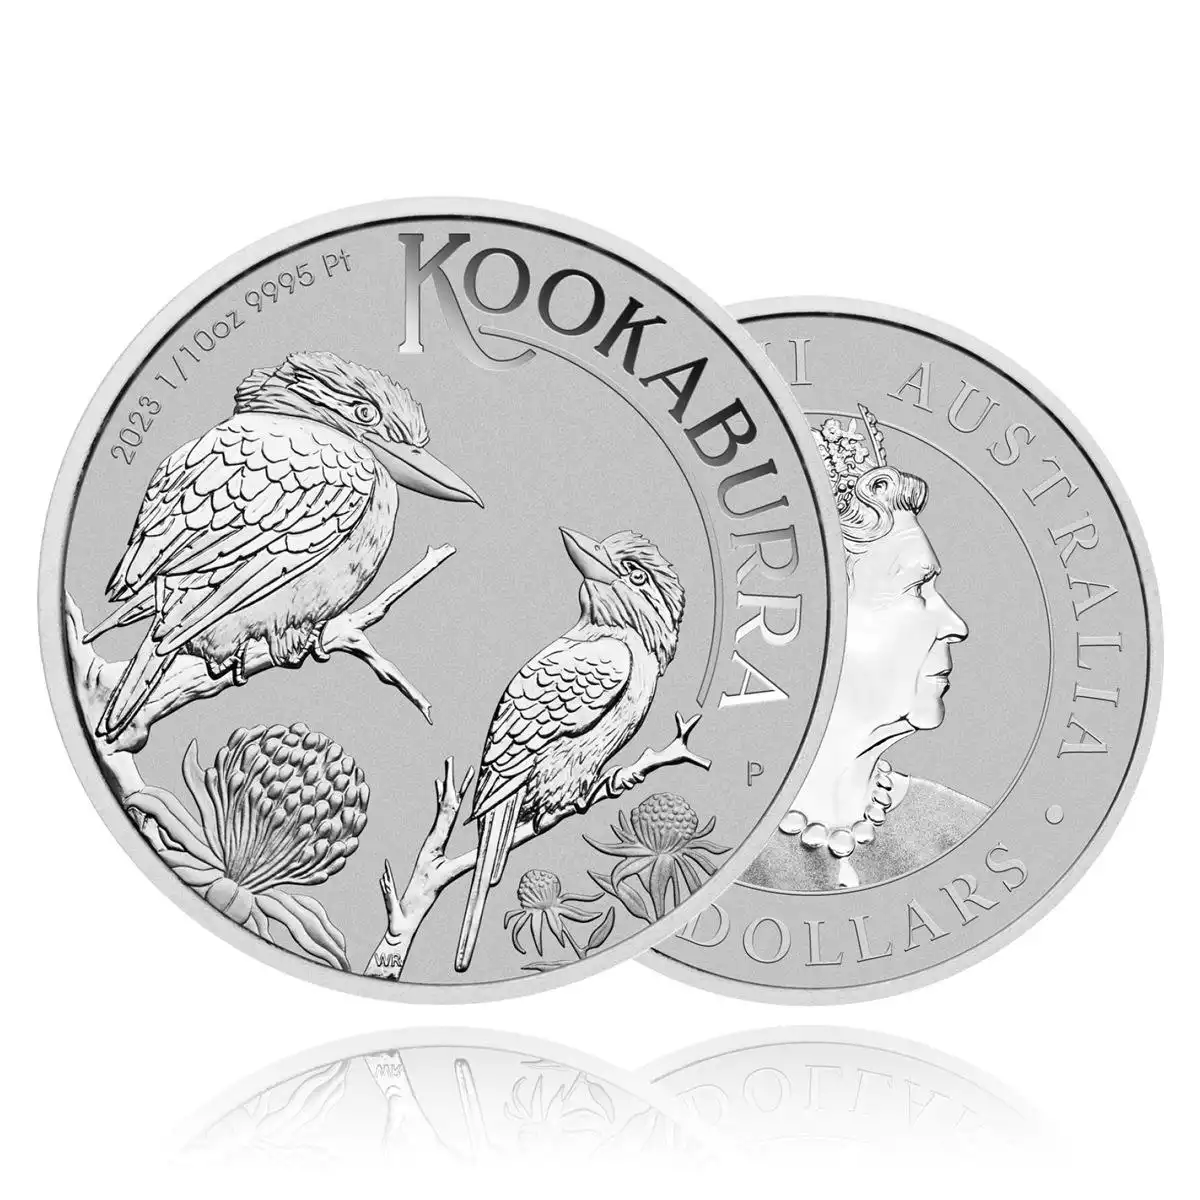 1/10oz platinum coin 2023 kookaburra - perth mintan exclusive retail offer from ainslie. the australian kookaburra 2023 1/10oz gold bullion coin featu...